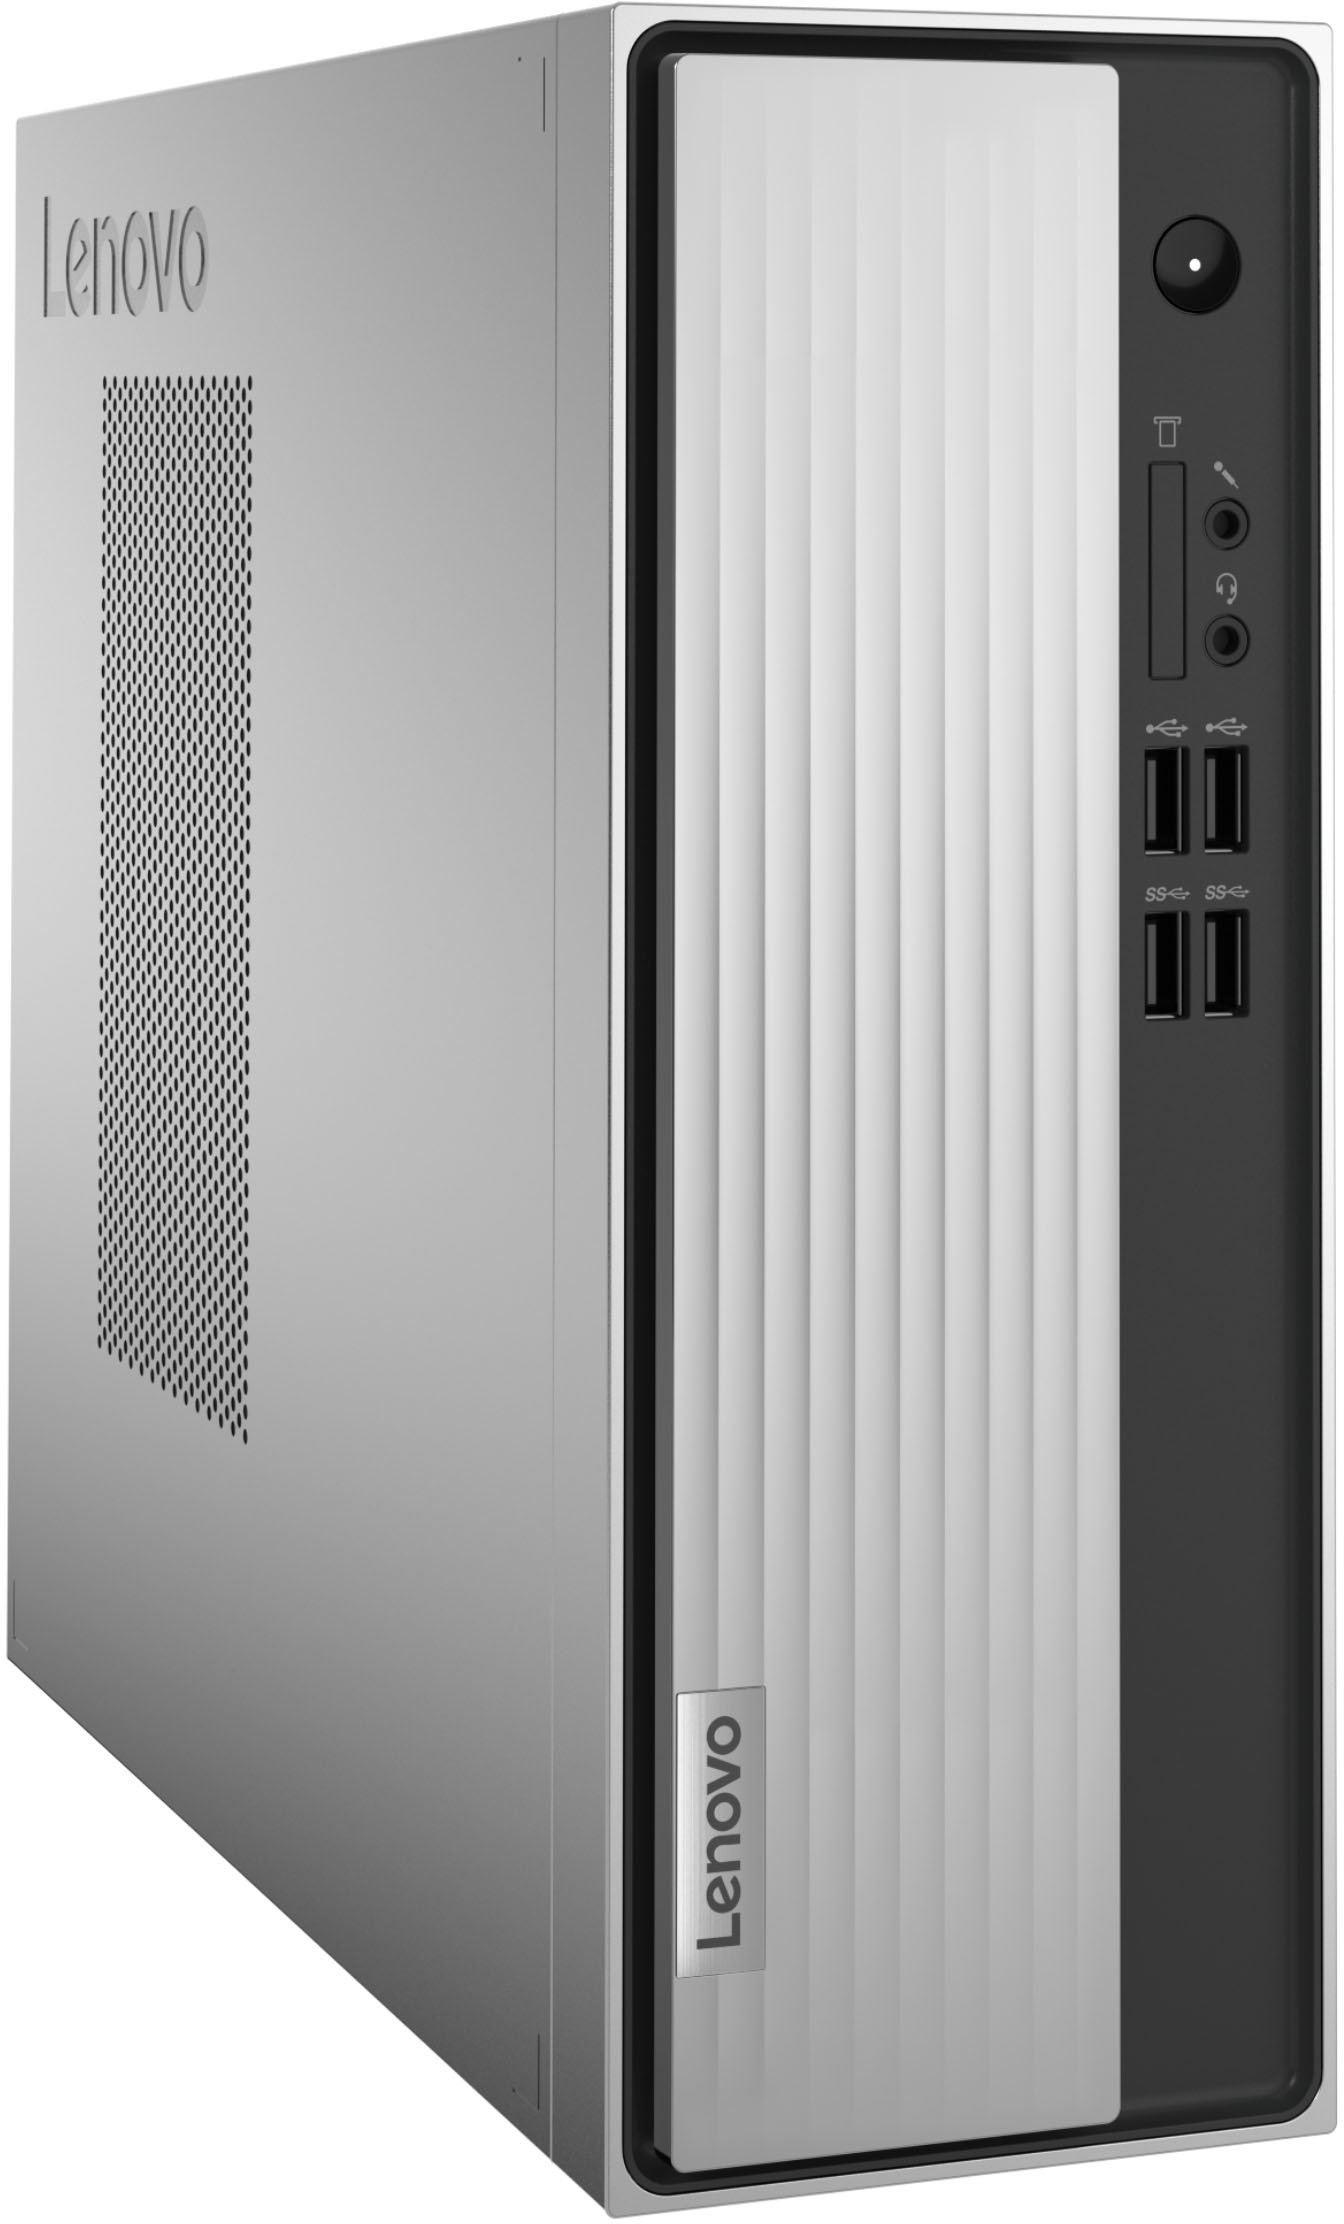 Lenovo IdeaCentre 3 Desktop AMD Athlon Memory 256GB Mineral Grey 90MV00ELUS - Best Buy